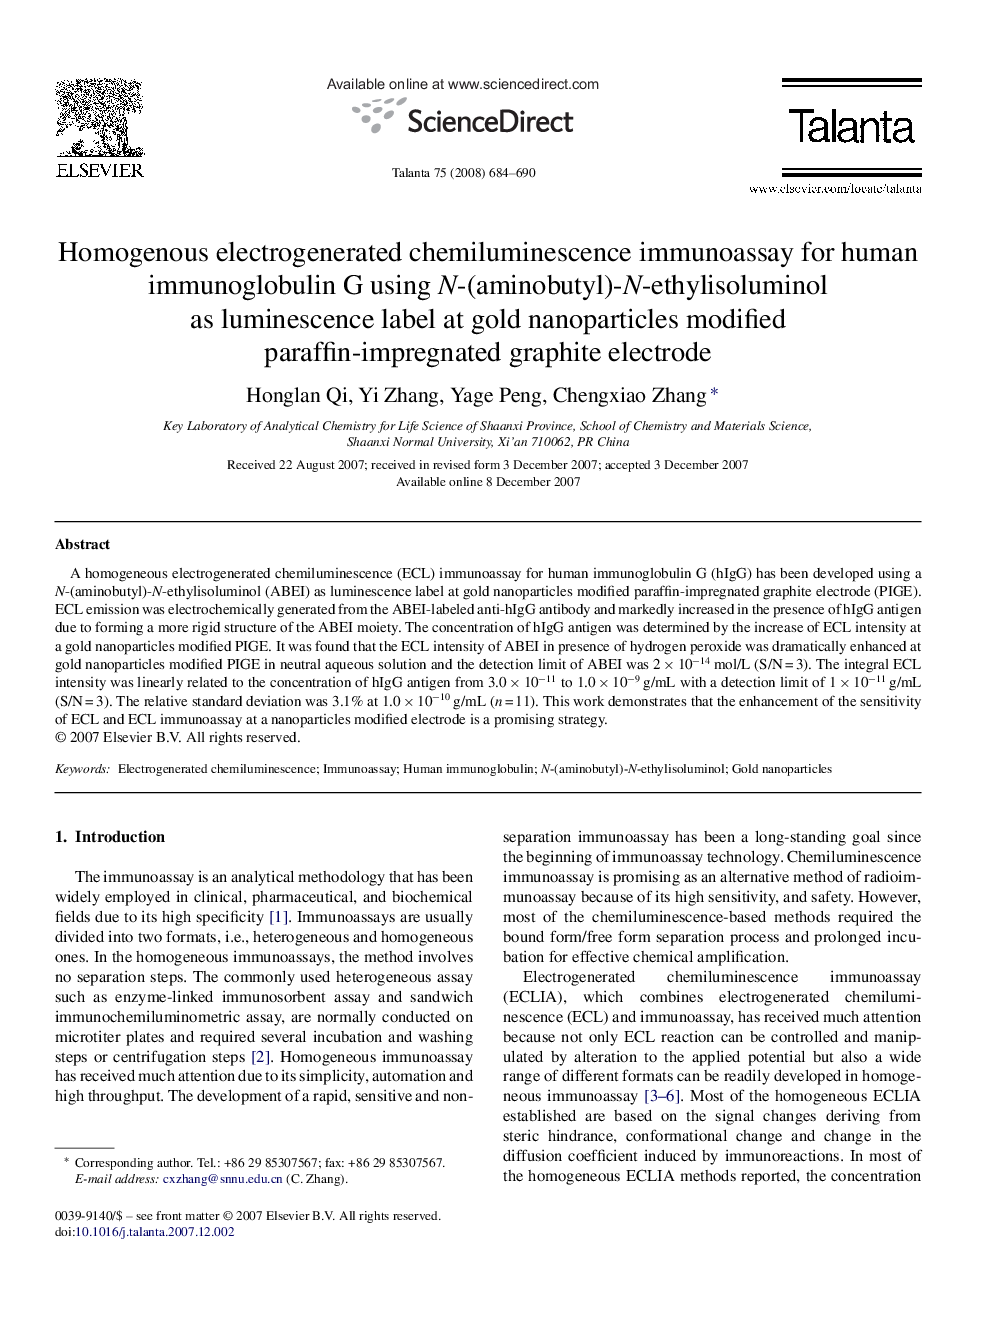 Homogenous electrogenerated chemiluminescence immunoassay for human immunoglobulin G using N-(aminobutyl)-N-ethylisoluminol as luminescence label at gold nanoparticles modified paraffin-impregnated graphite electrode